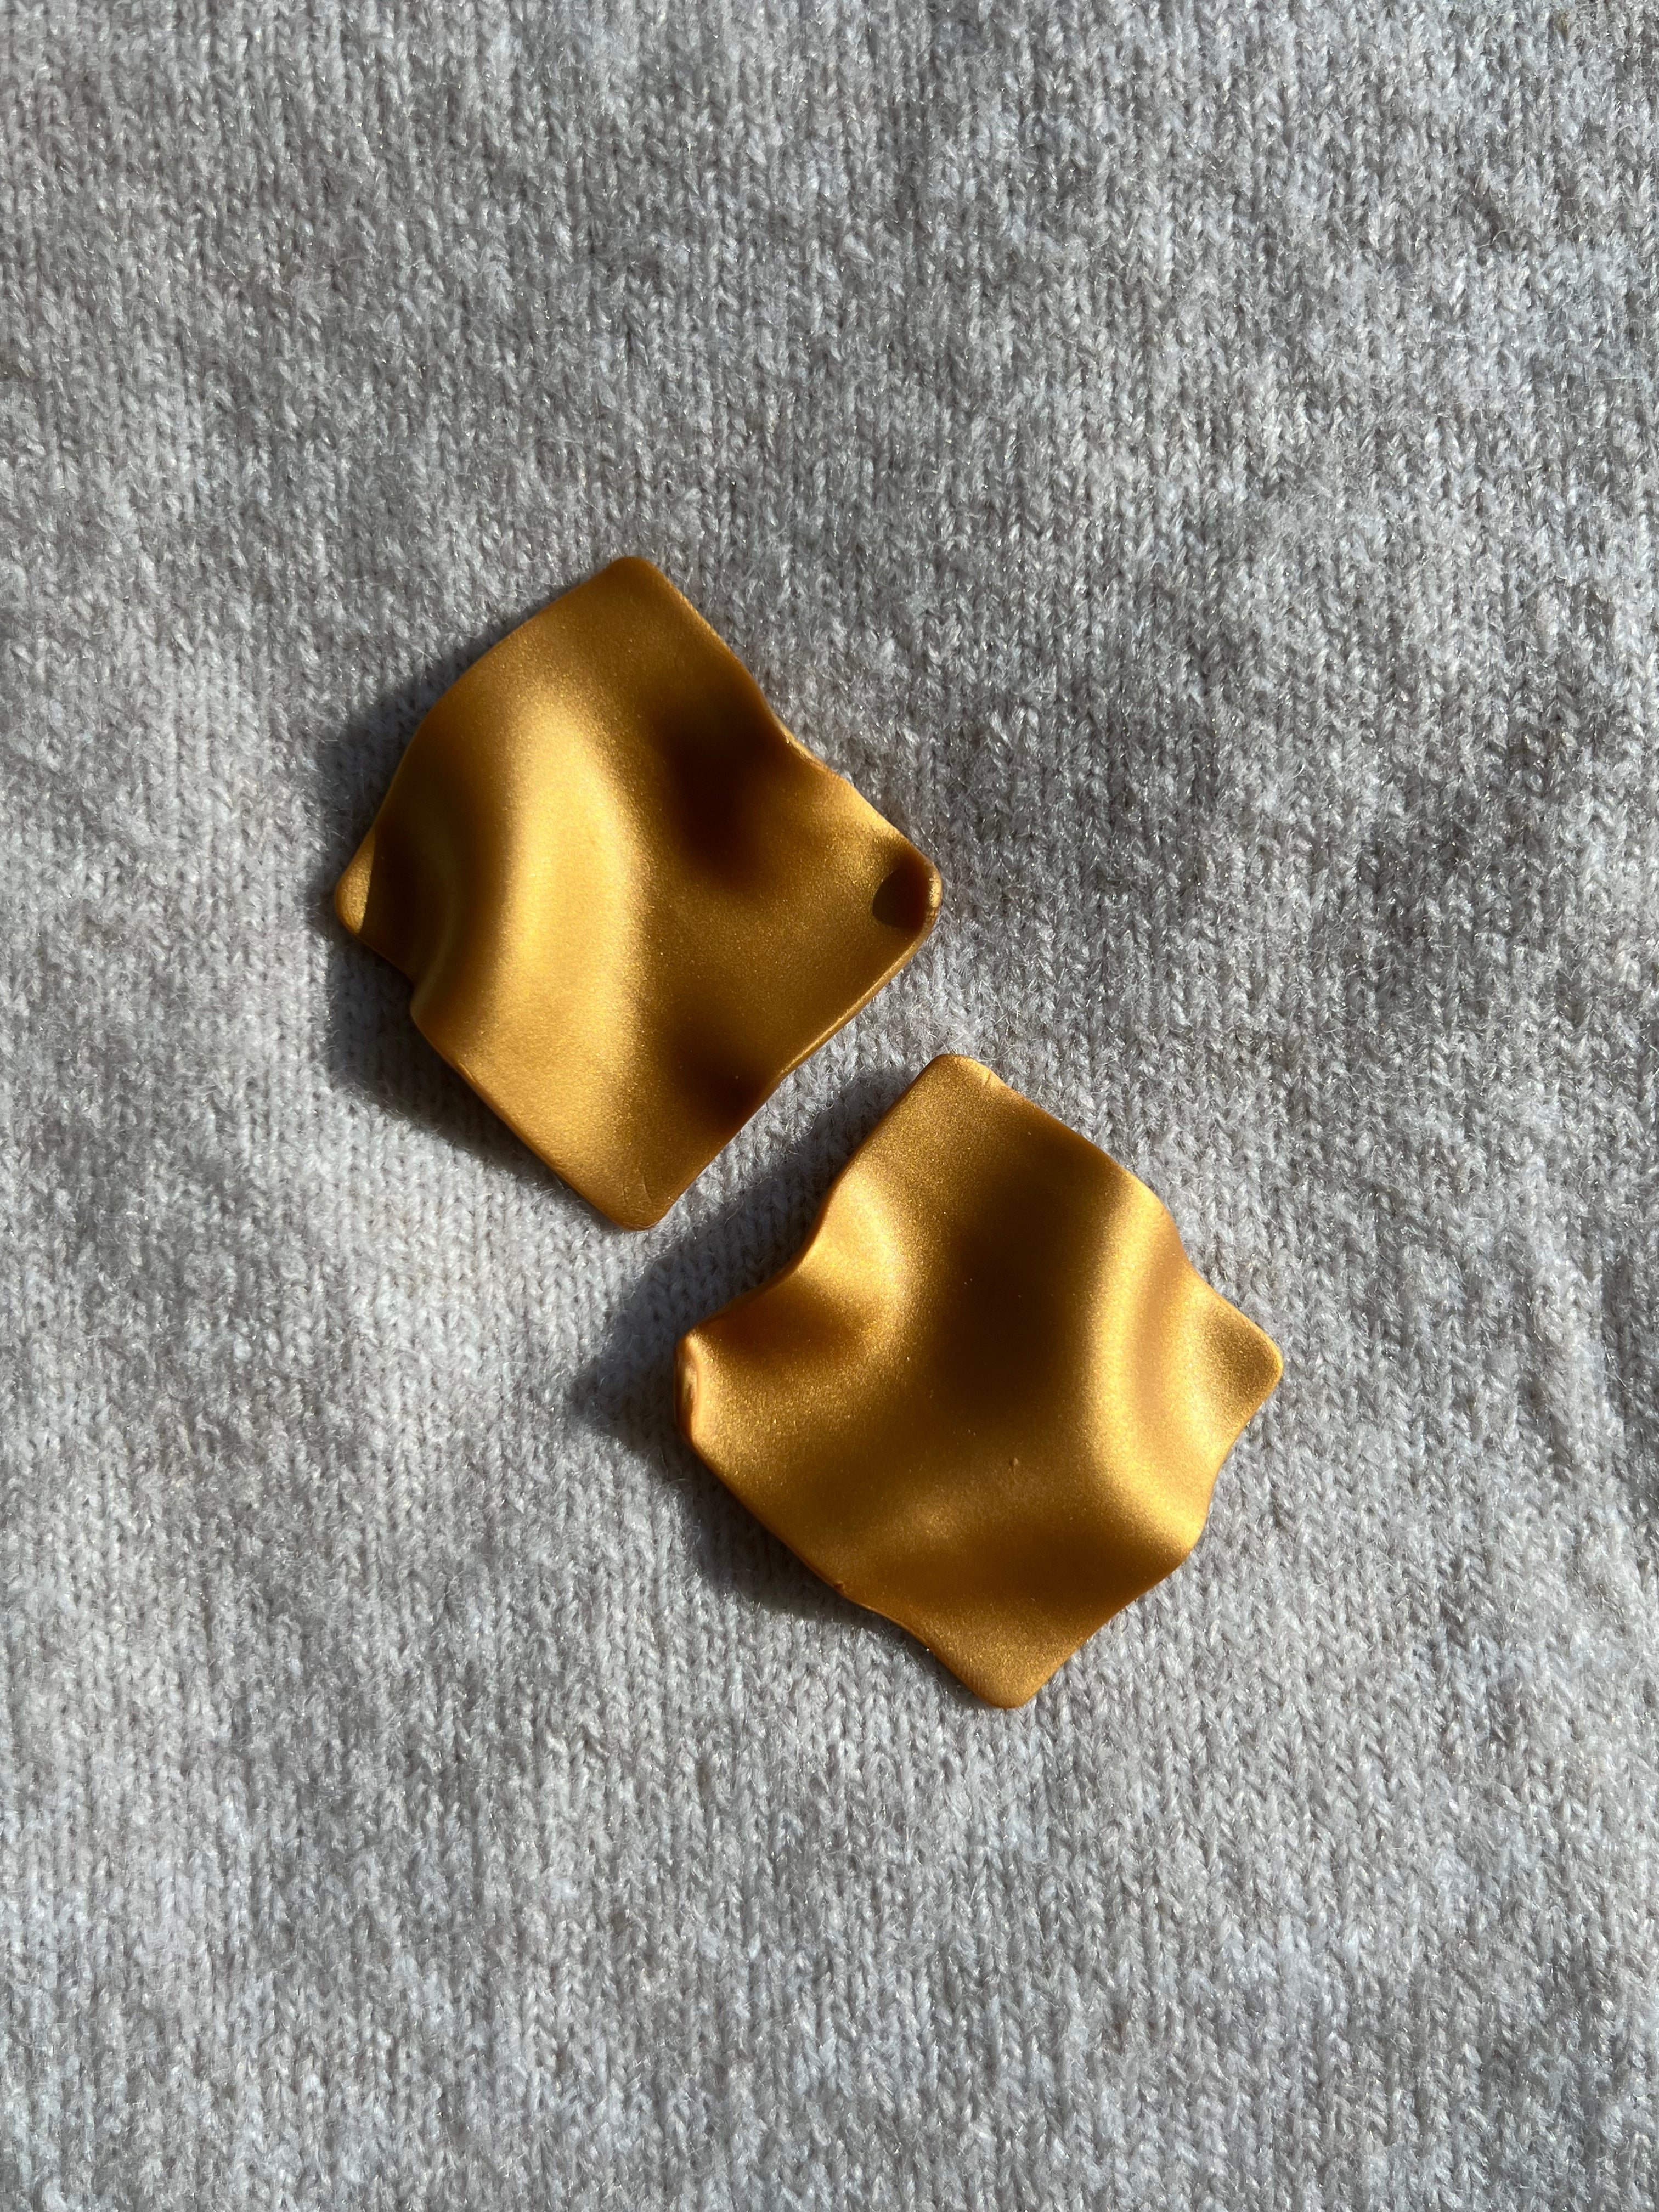 Folded studs - gold